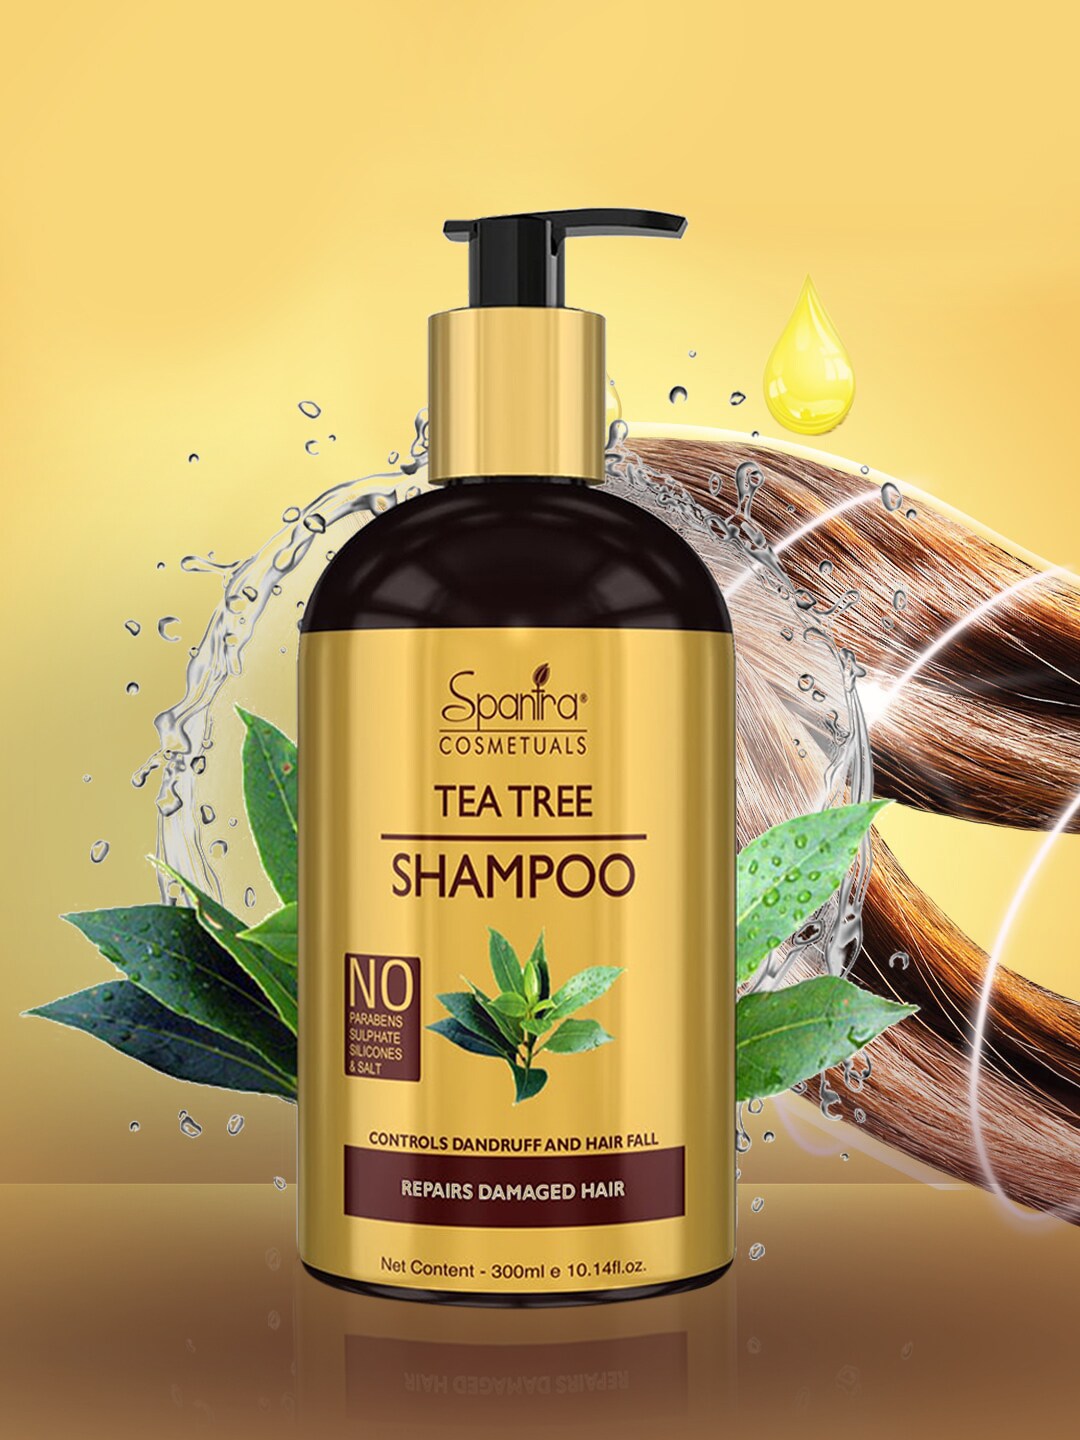 Spantra Unisex Tea Tree Shampoo 300 ml Price in India